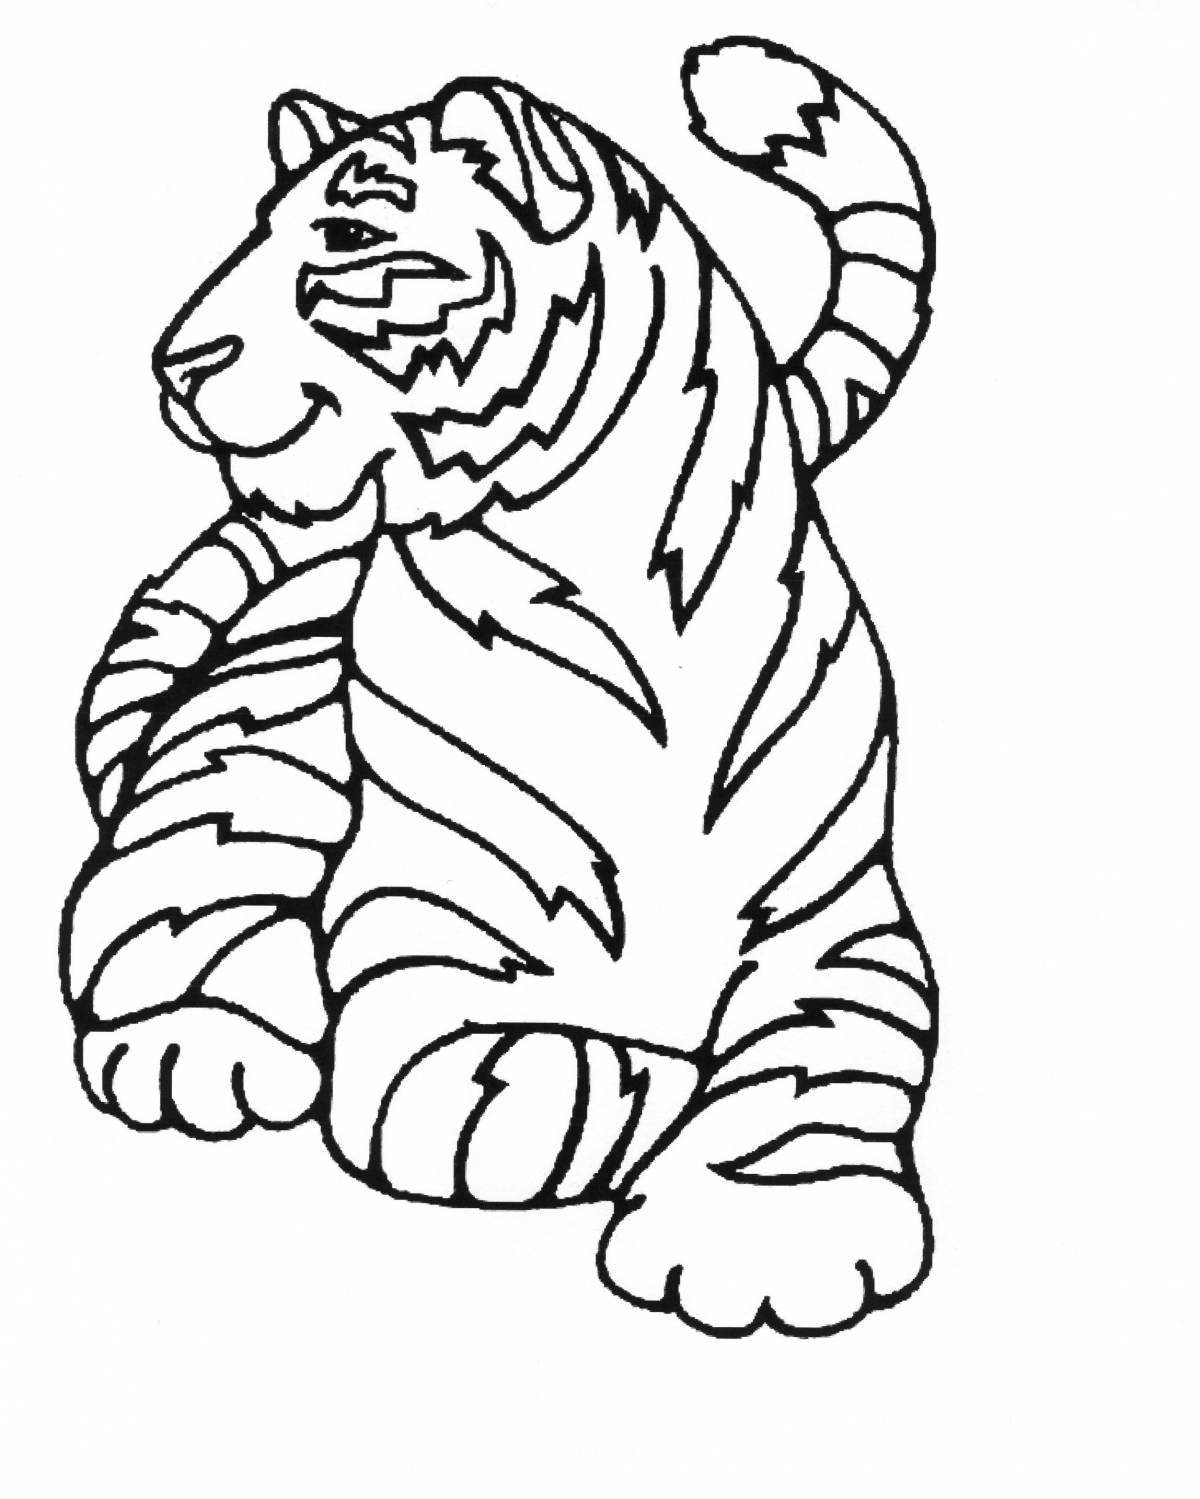 Coloring page elegant tiger sherkhan